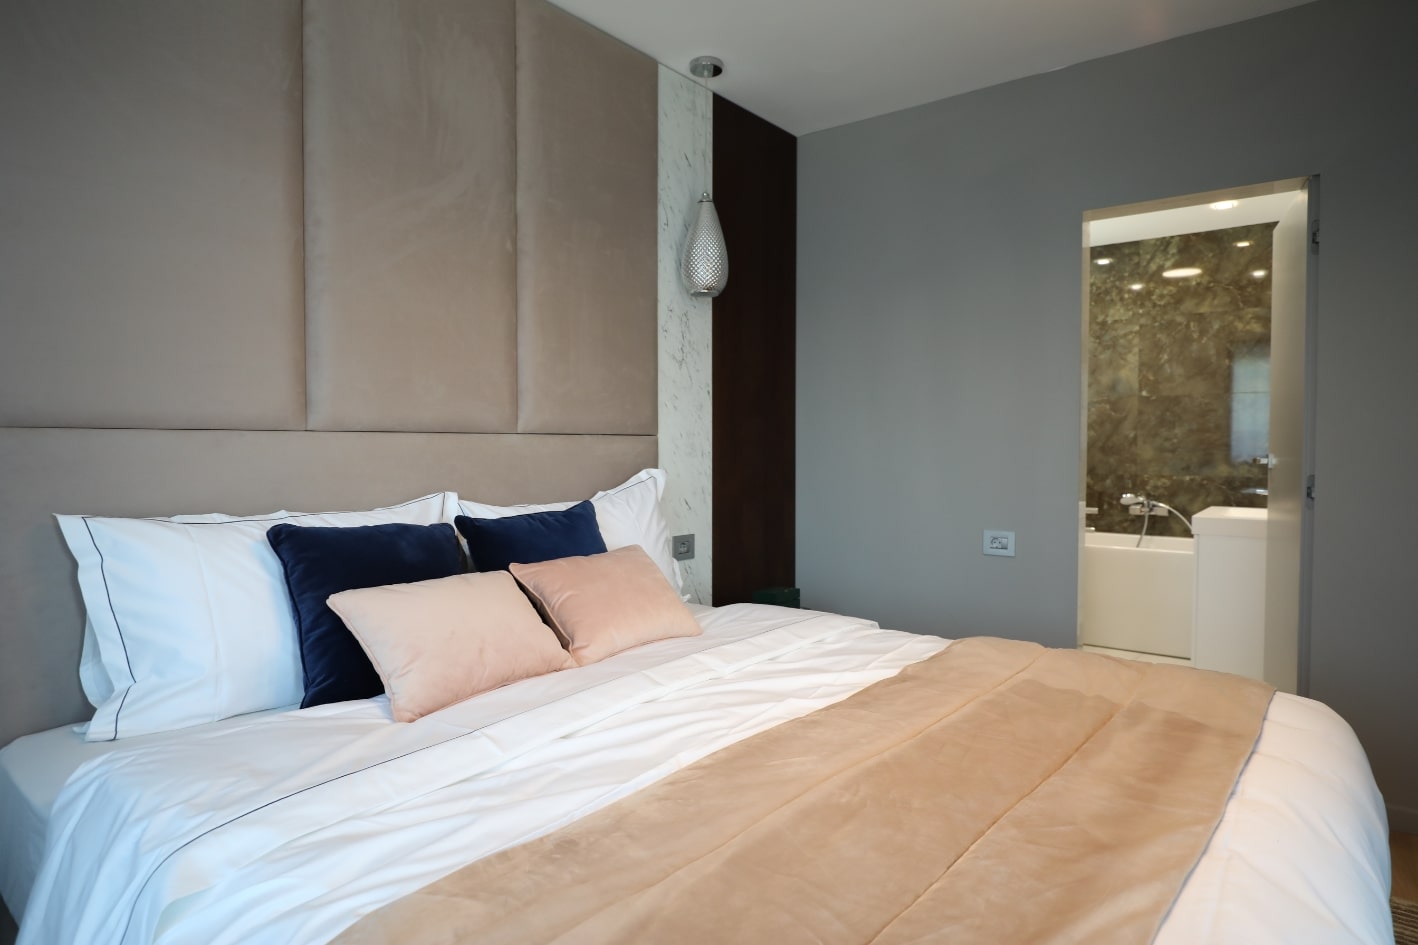 Design interior dormitor matrimonial inalt cu un pat mare si materiale textile de culoare alba si roz.